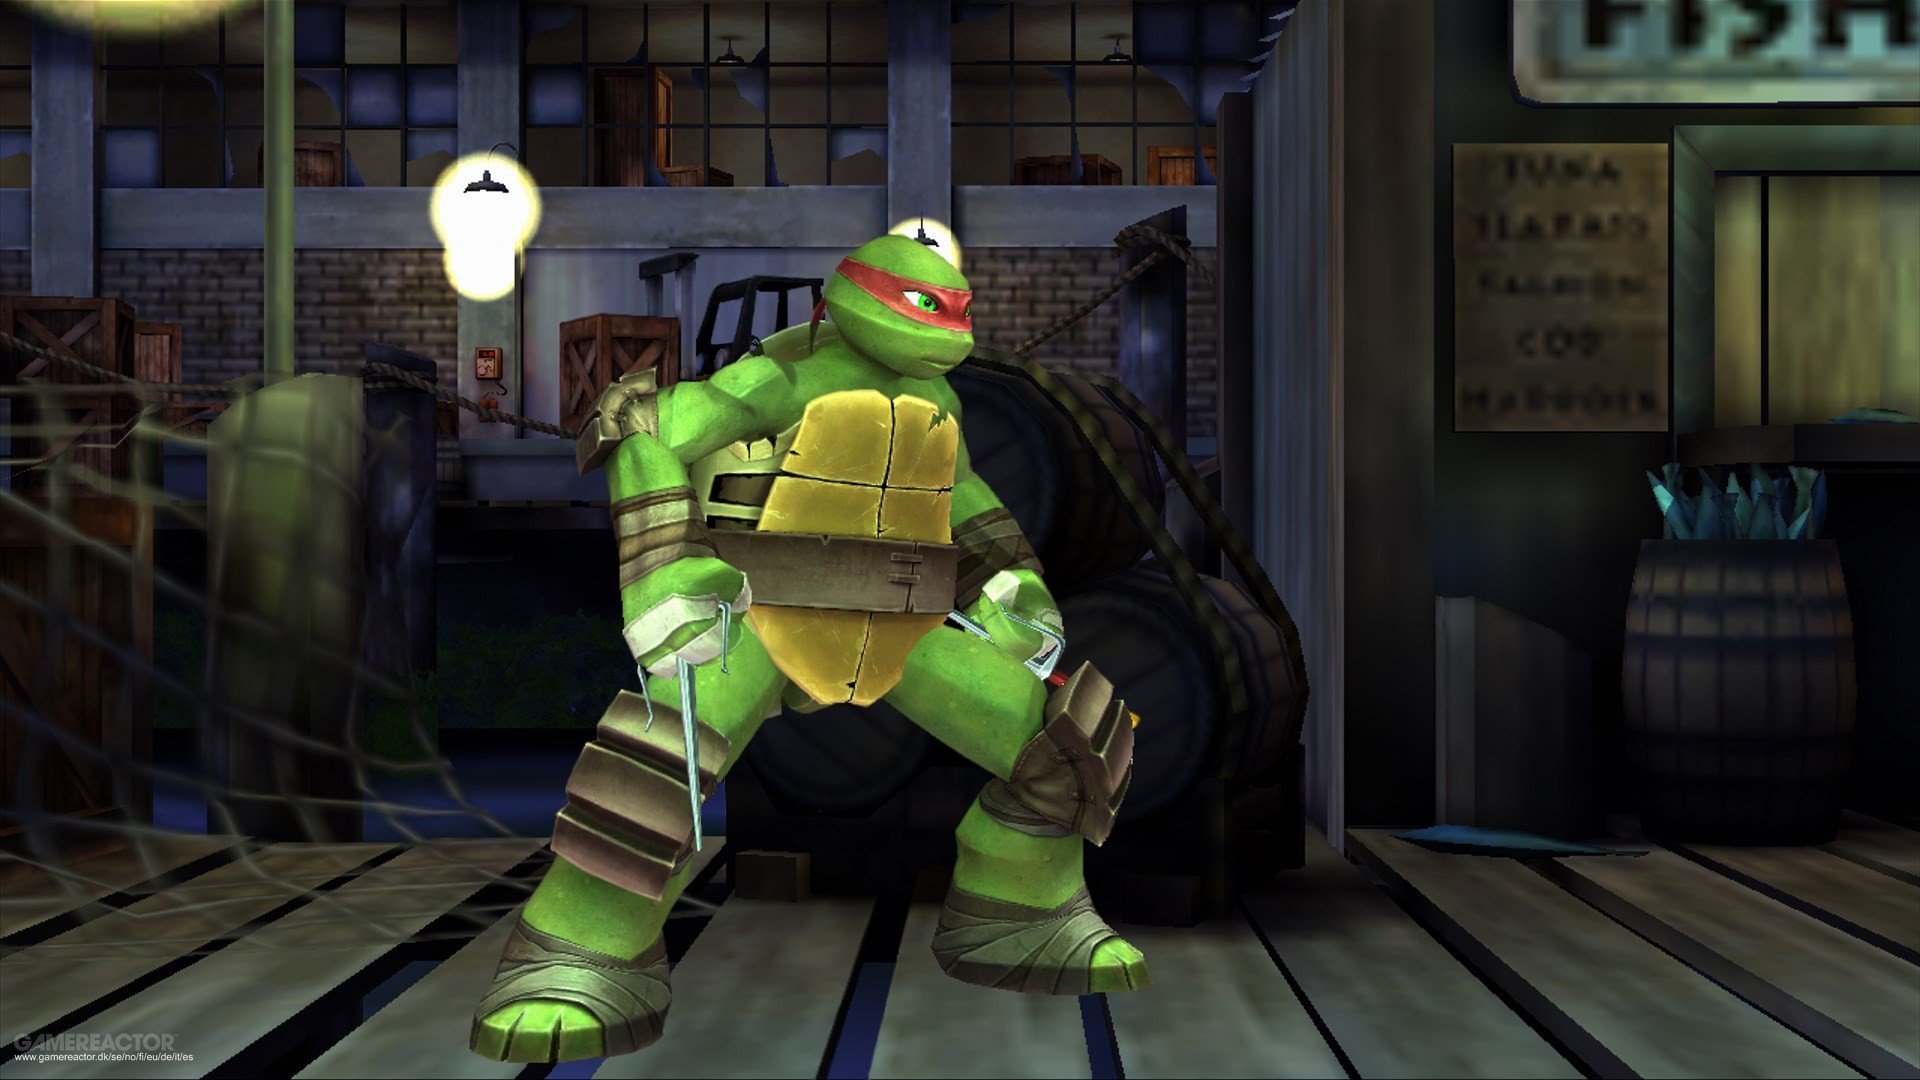 Папа играет в черепашки. Mutant Ninja Turtles игра. Teenage Mutant Ninja Turtles игра 2007. Черепашки ниндзя Xbox 360. Teenage Mutant Ninja Turtles (игра, 2003).